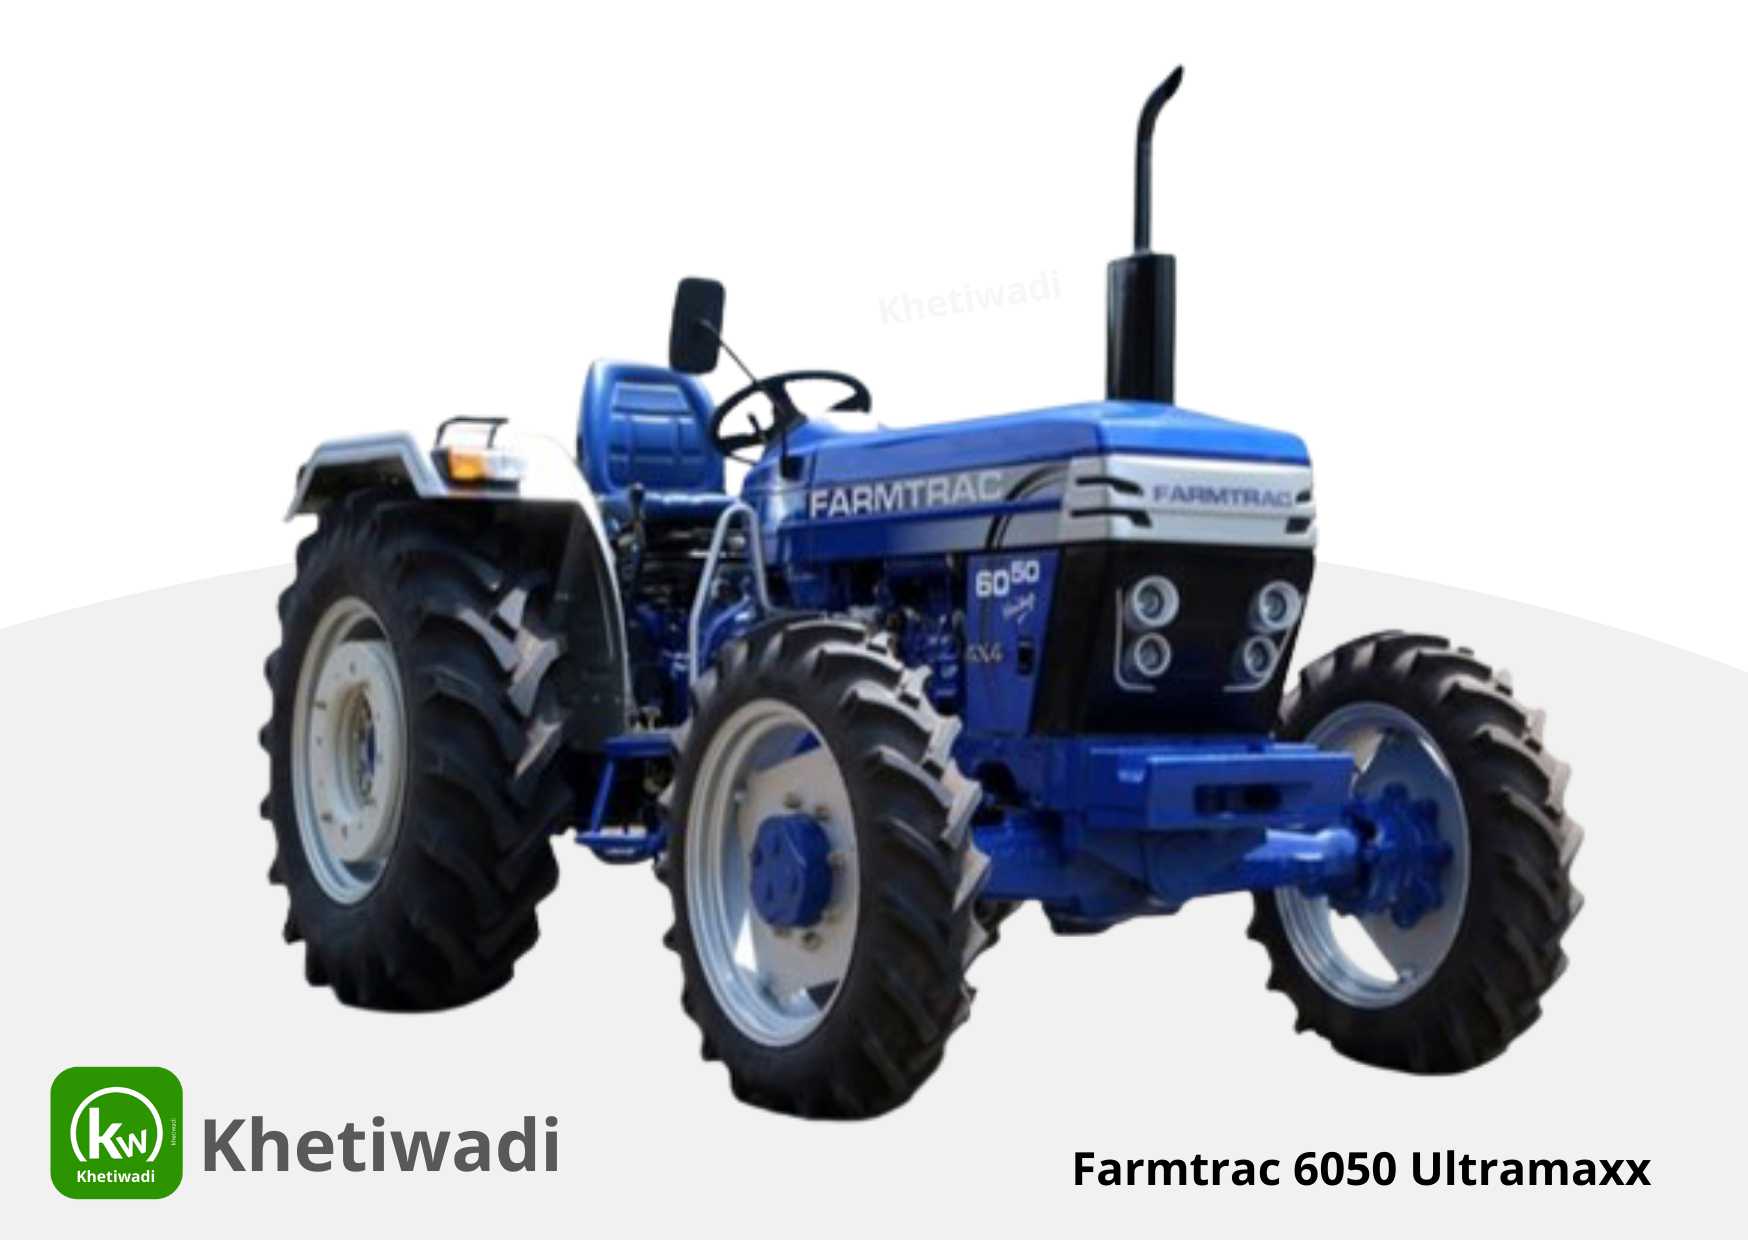 Farmtrac 6050 Ultramaxx image